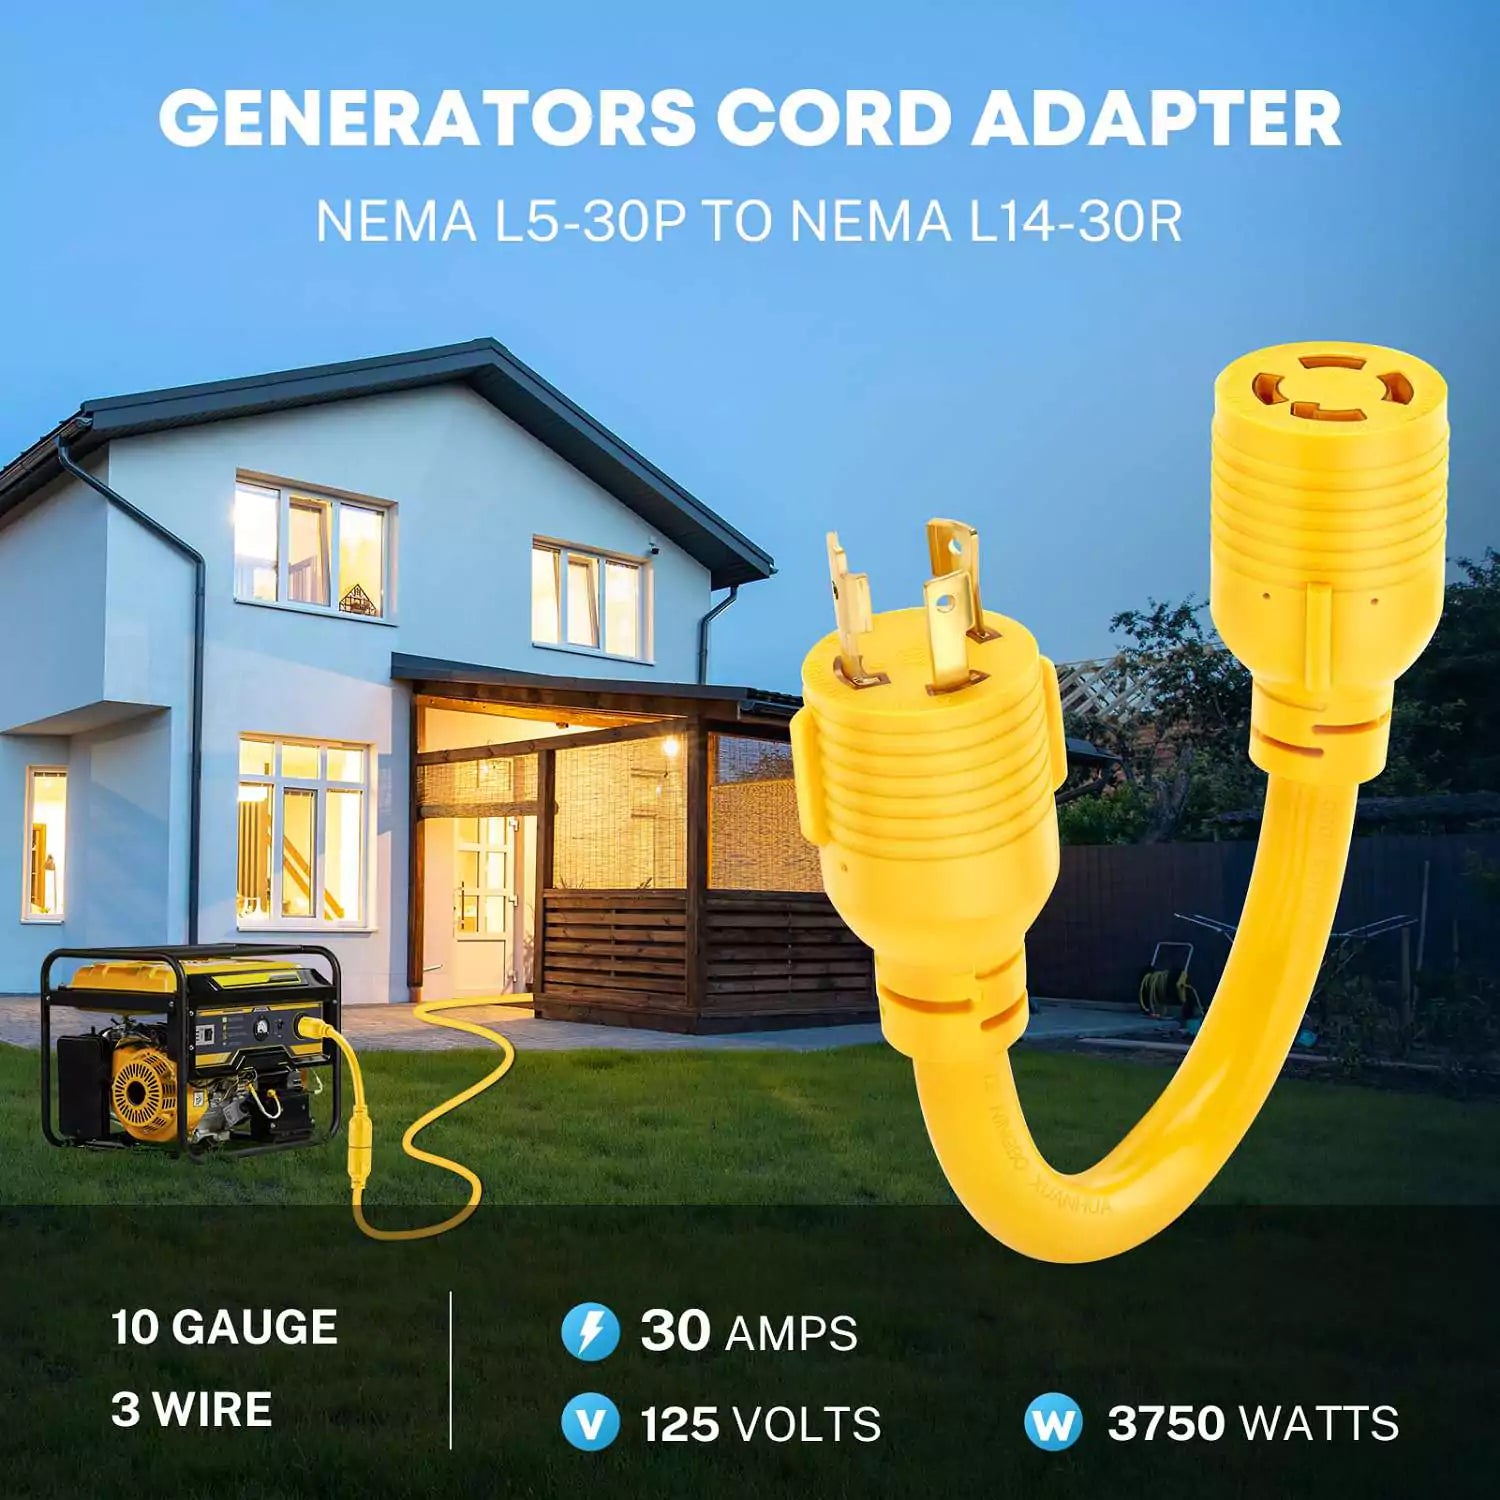 Generators cord adapter NEMA L5-30P to L14-30R